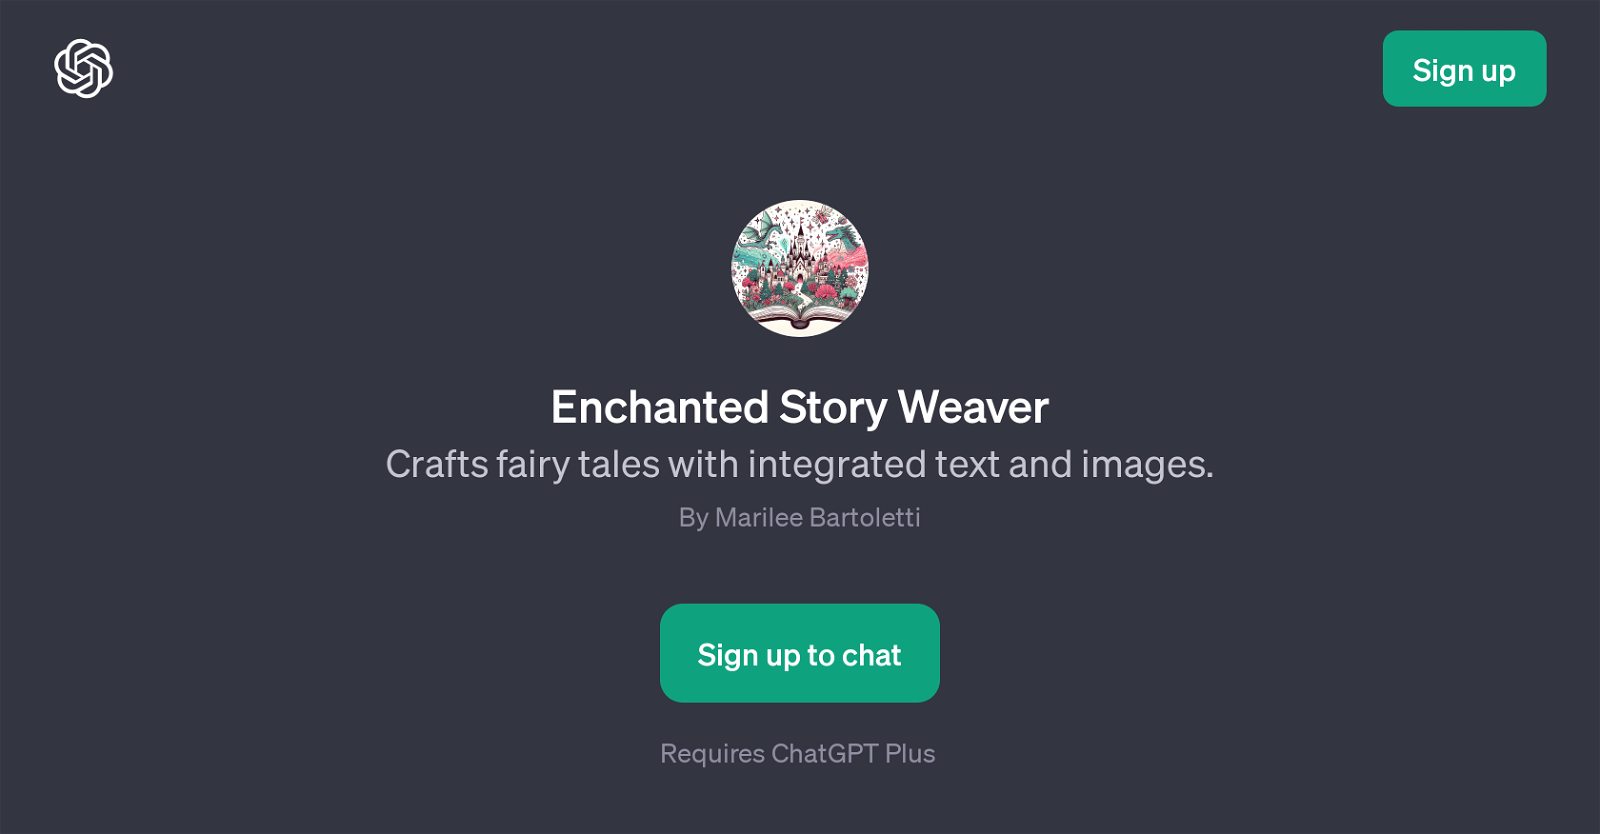 Enchanted Story Weaver website